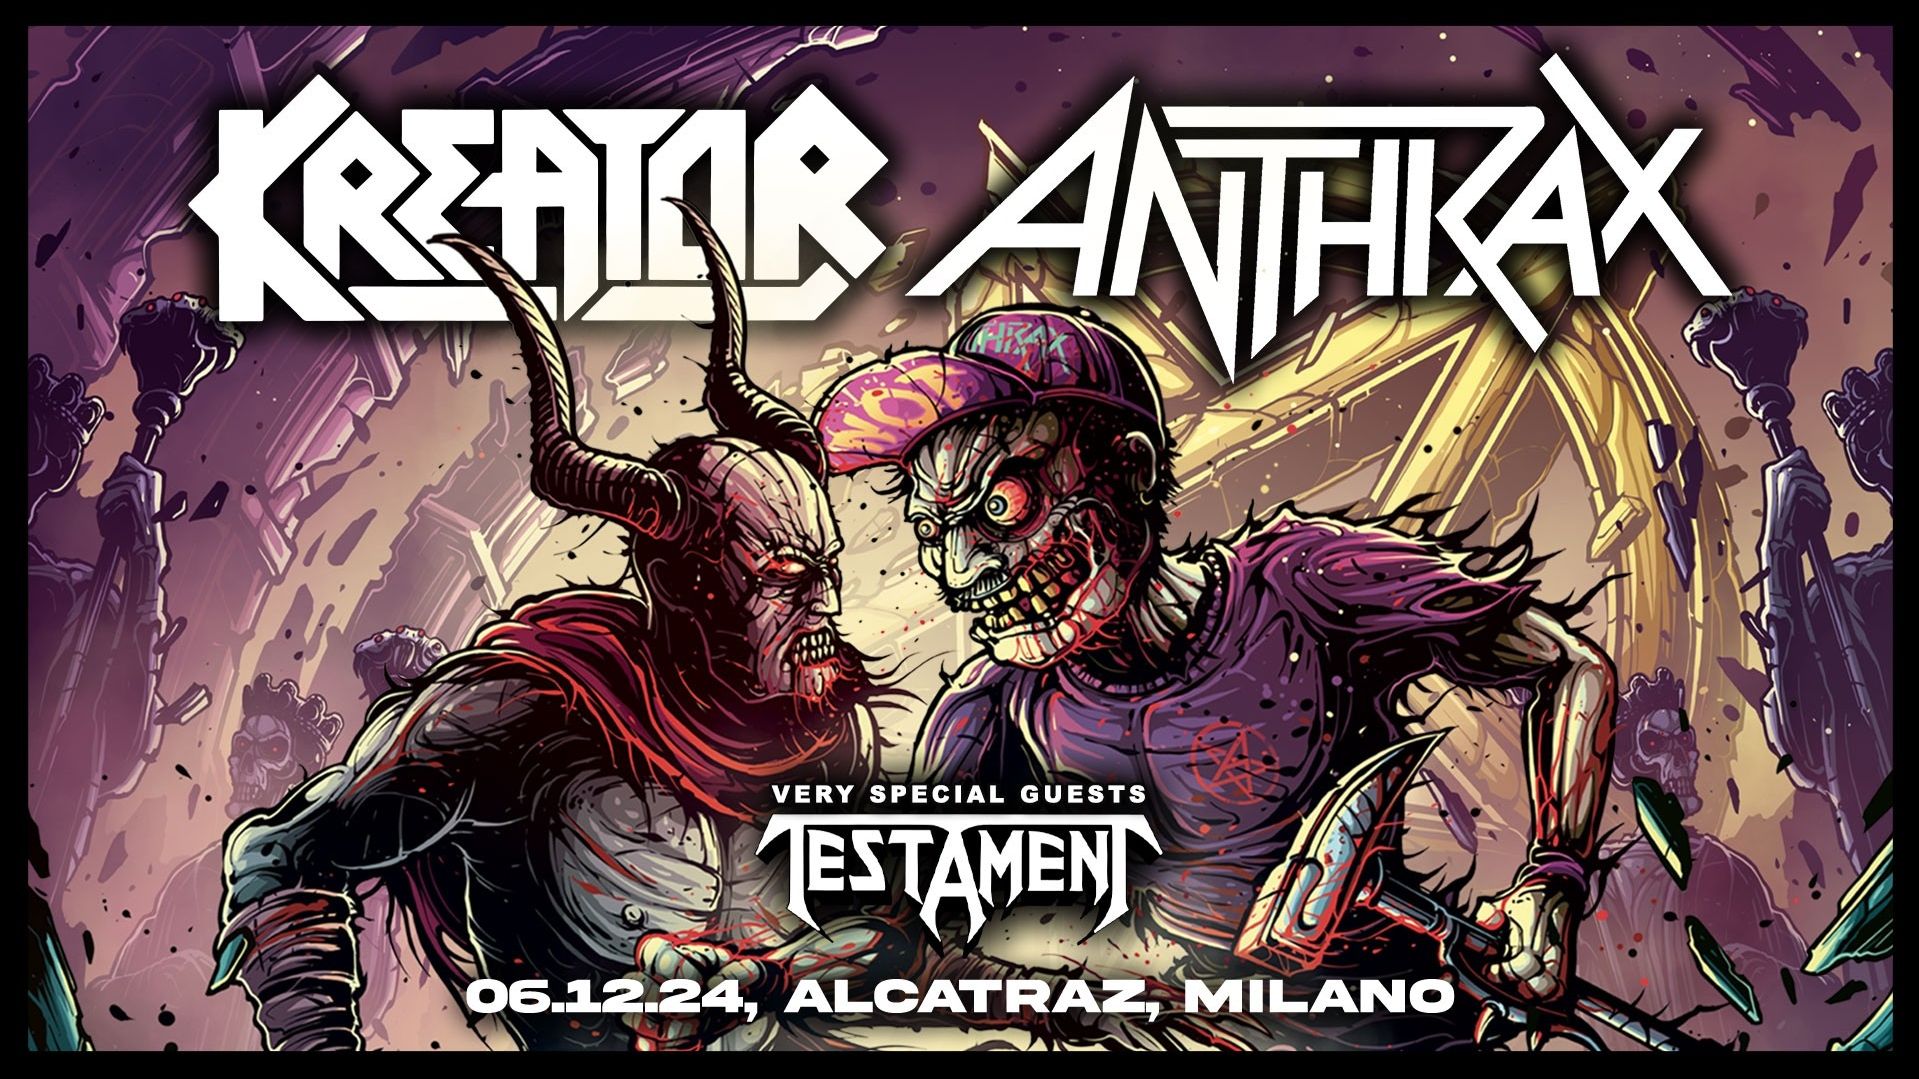 Kreator & Anthrax + Testament